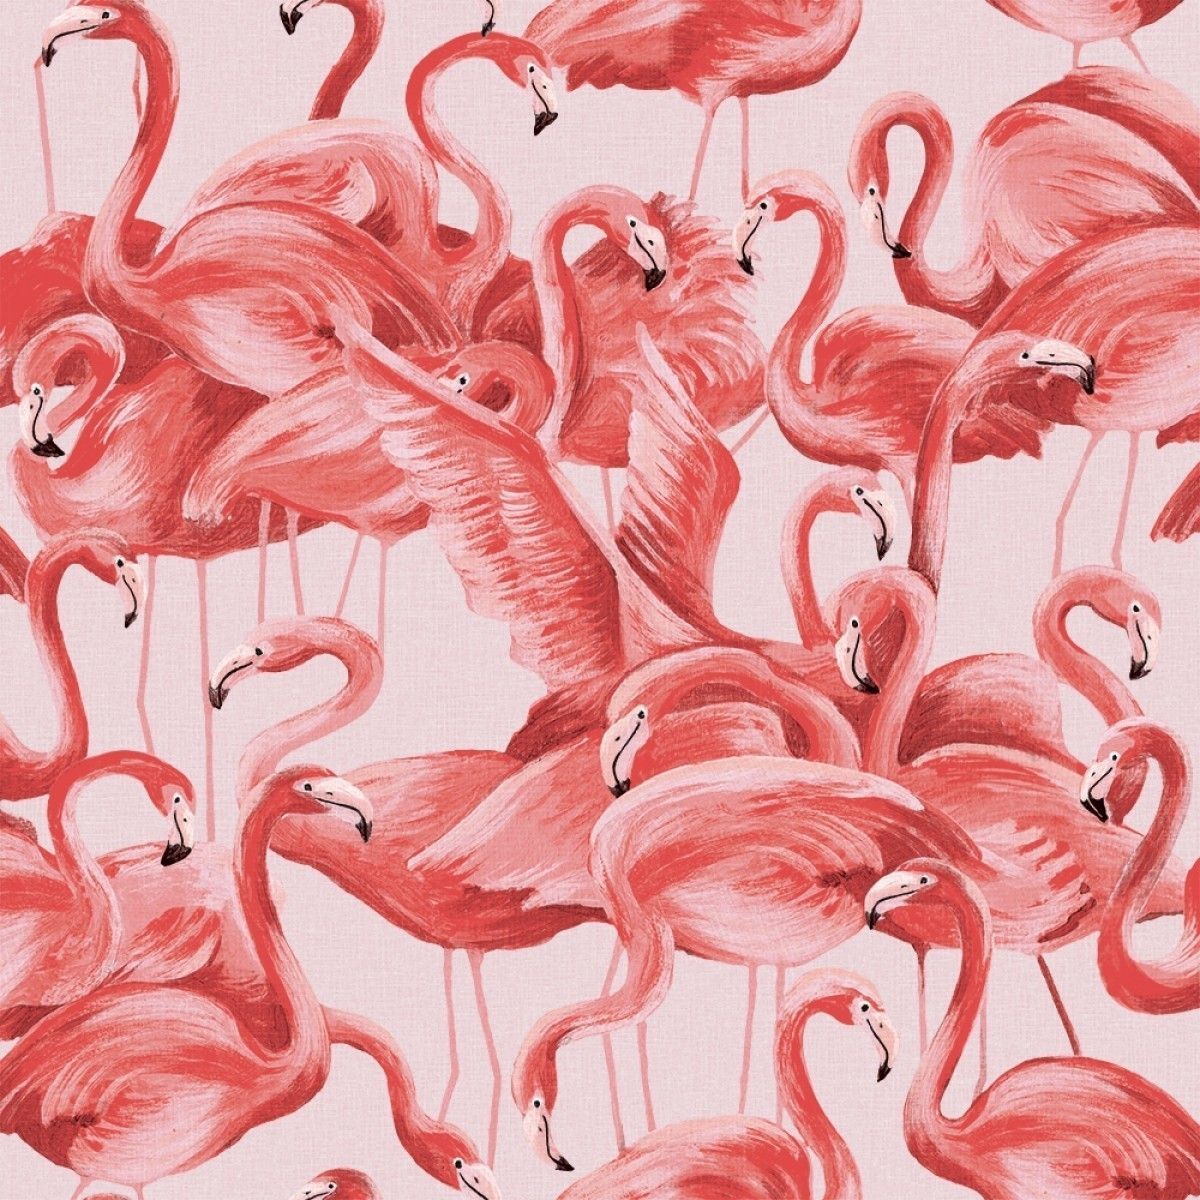 Flamingo Cheeky Pink FL538 Self-Adhesive Wallpaper